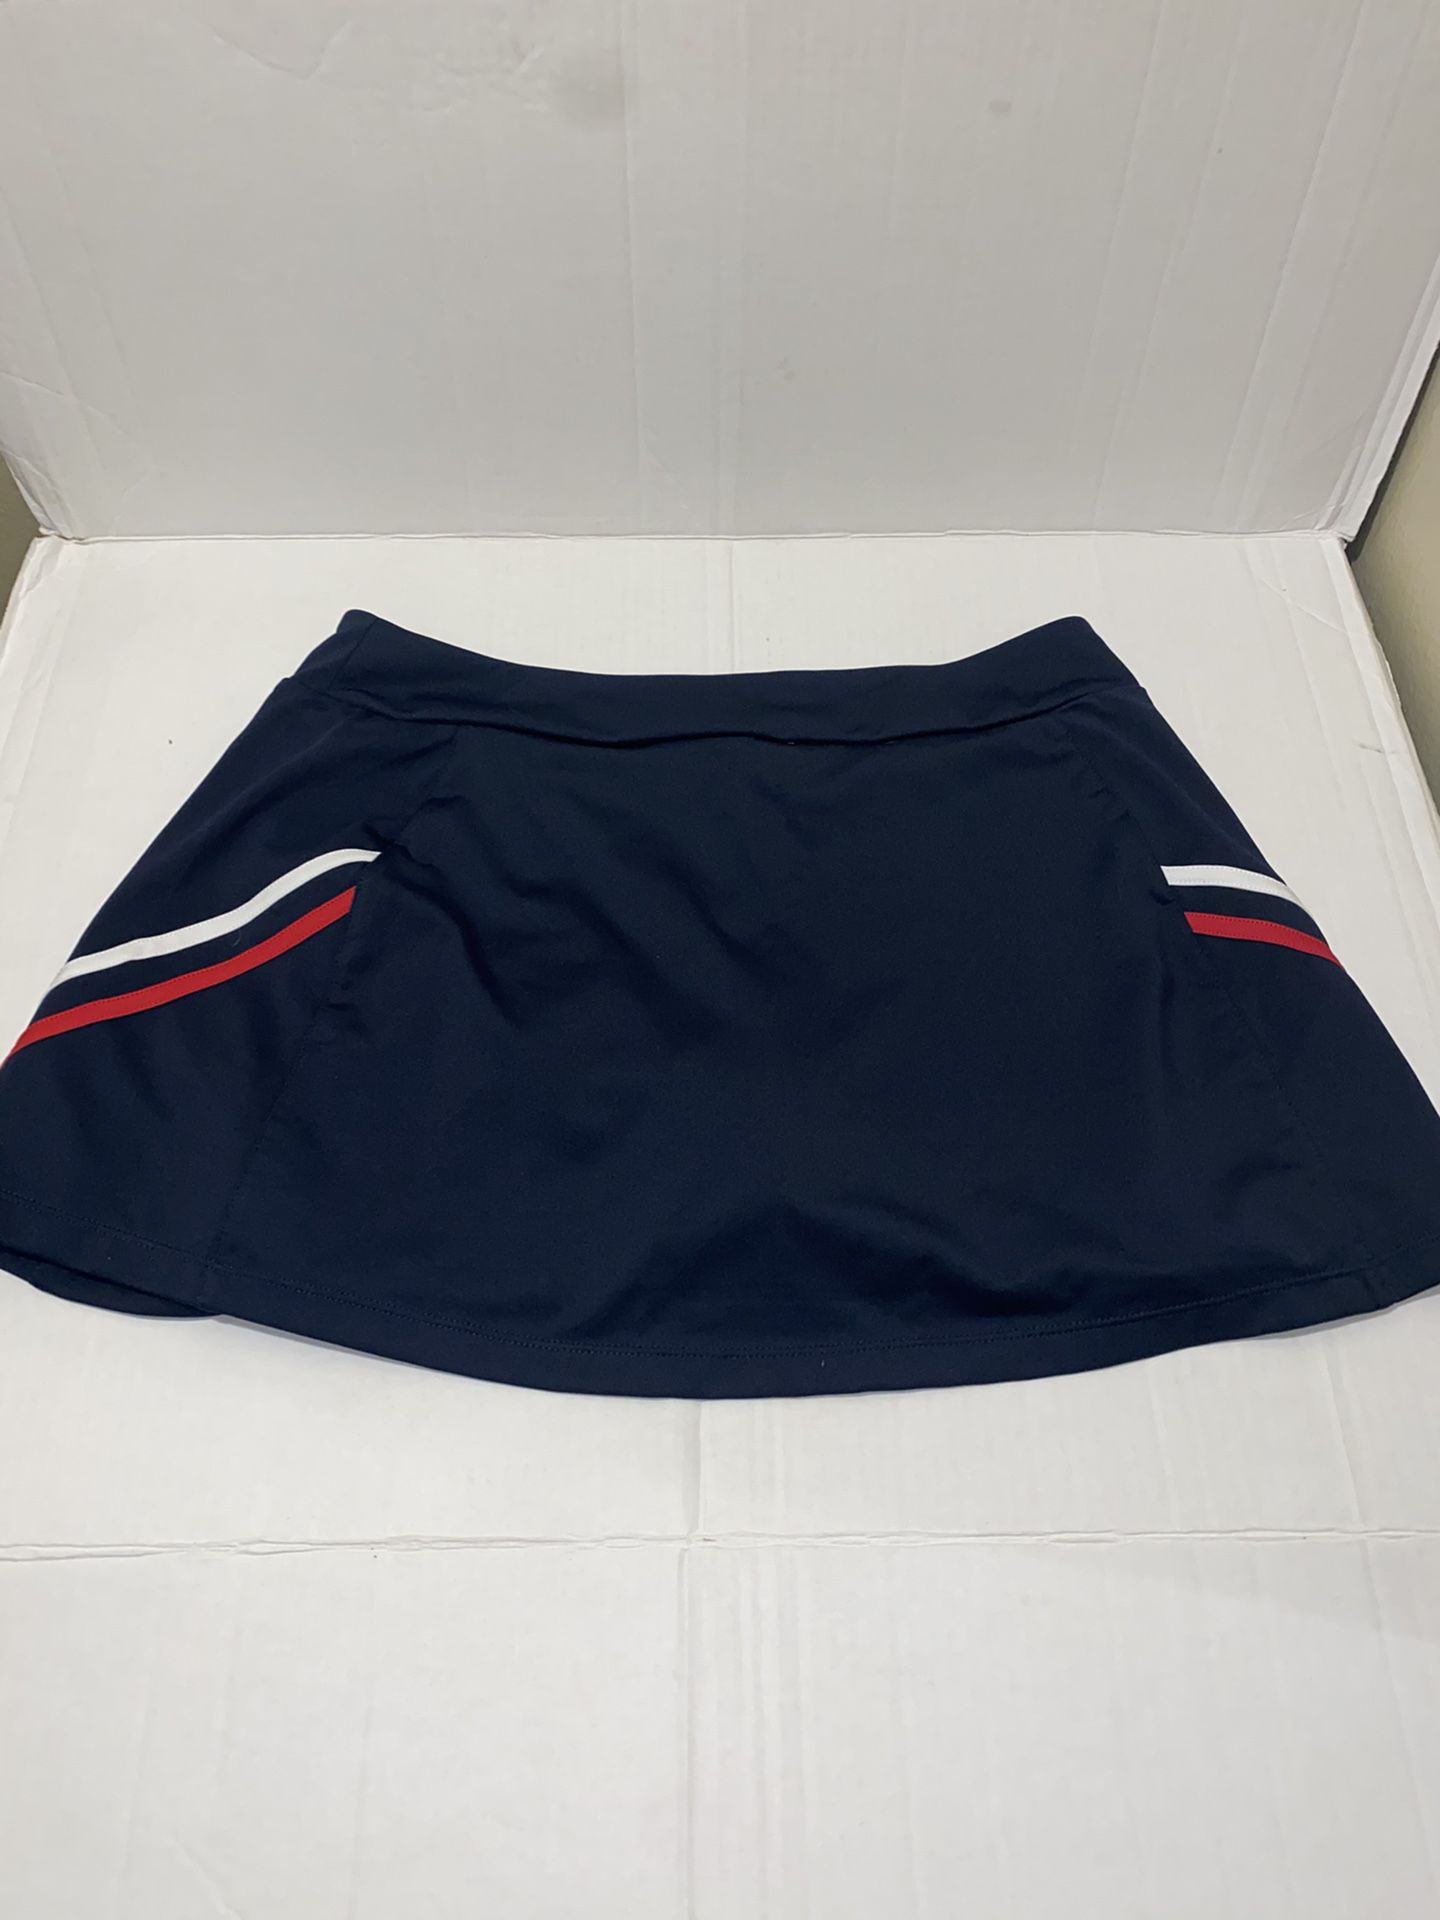 Forskellige dybde Elendig FILA Tennis Skirt for Sale in Brooklyn, NY - OfferUp